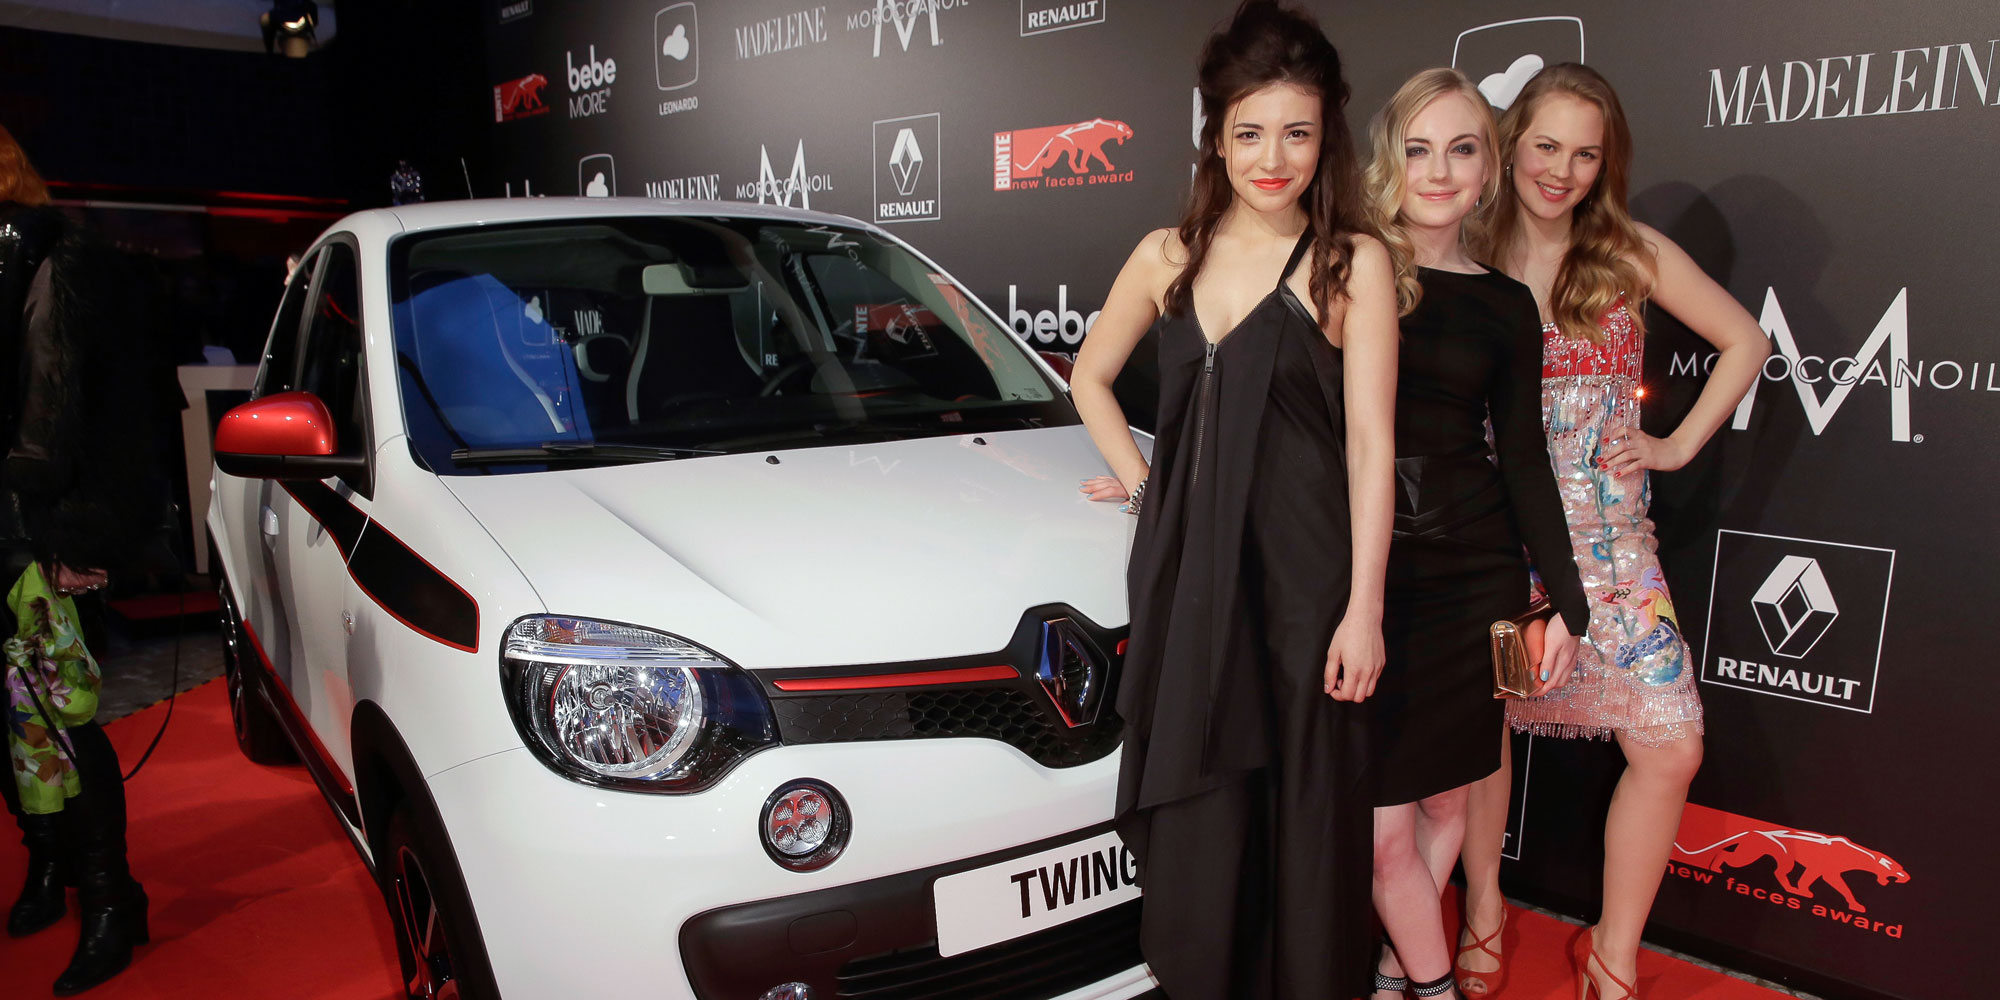 Renault auf dem News Faces Award 2014